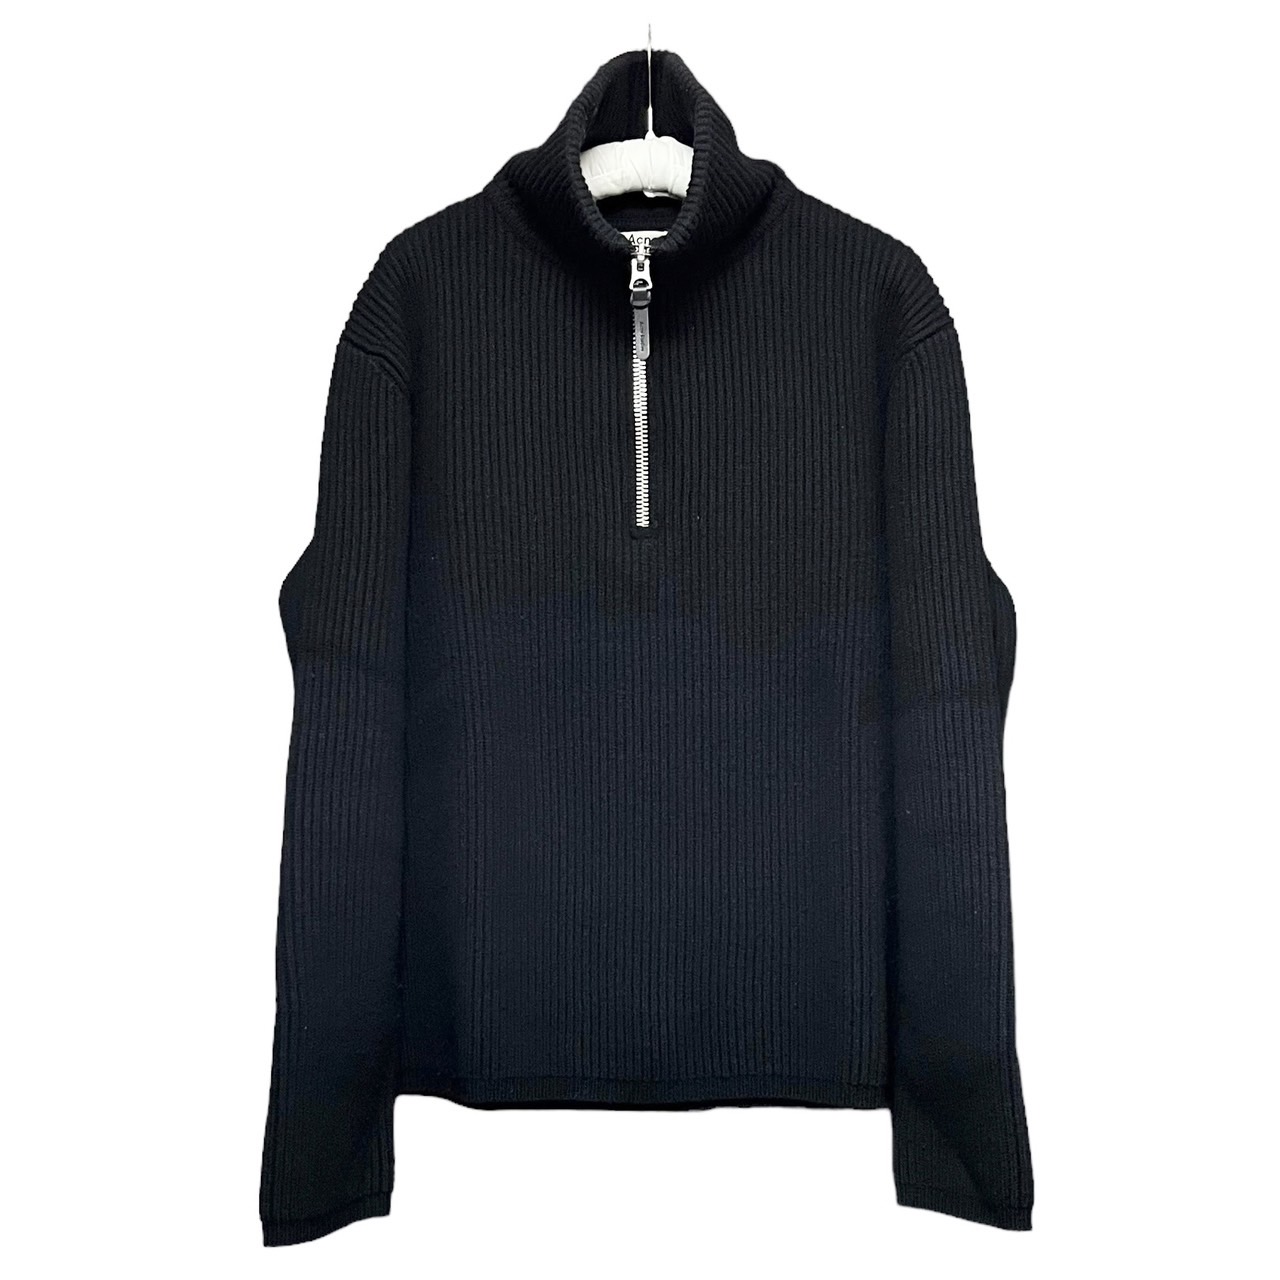 Acne Studios 18AW Fisherman sweater FN-MN-KNIT000005 買取金額 9,100円